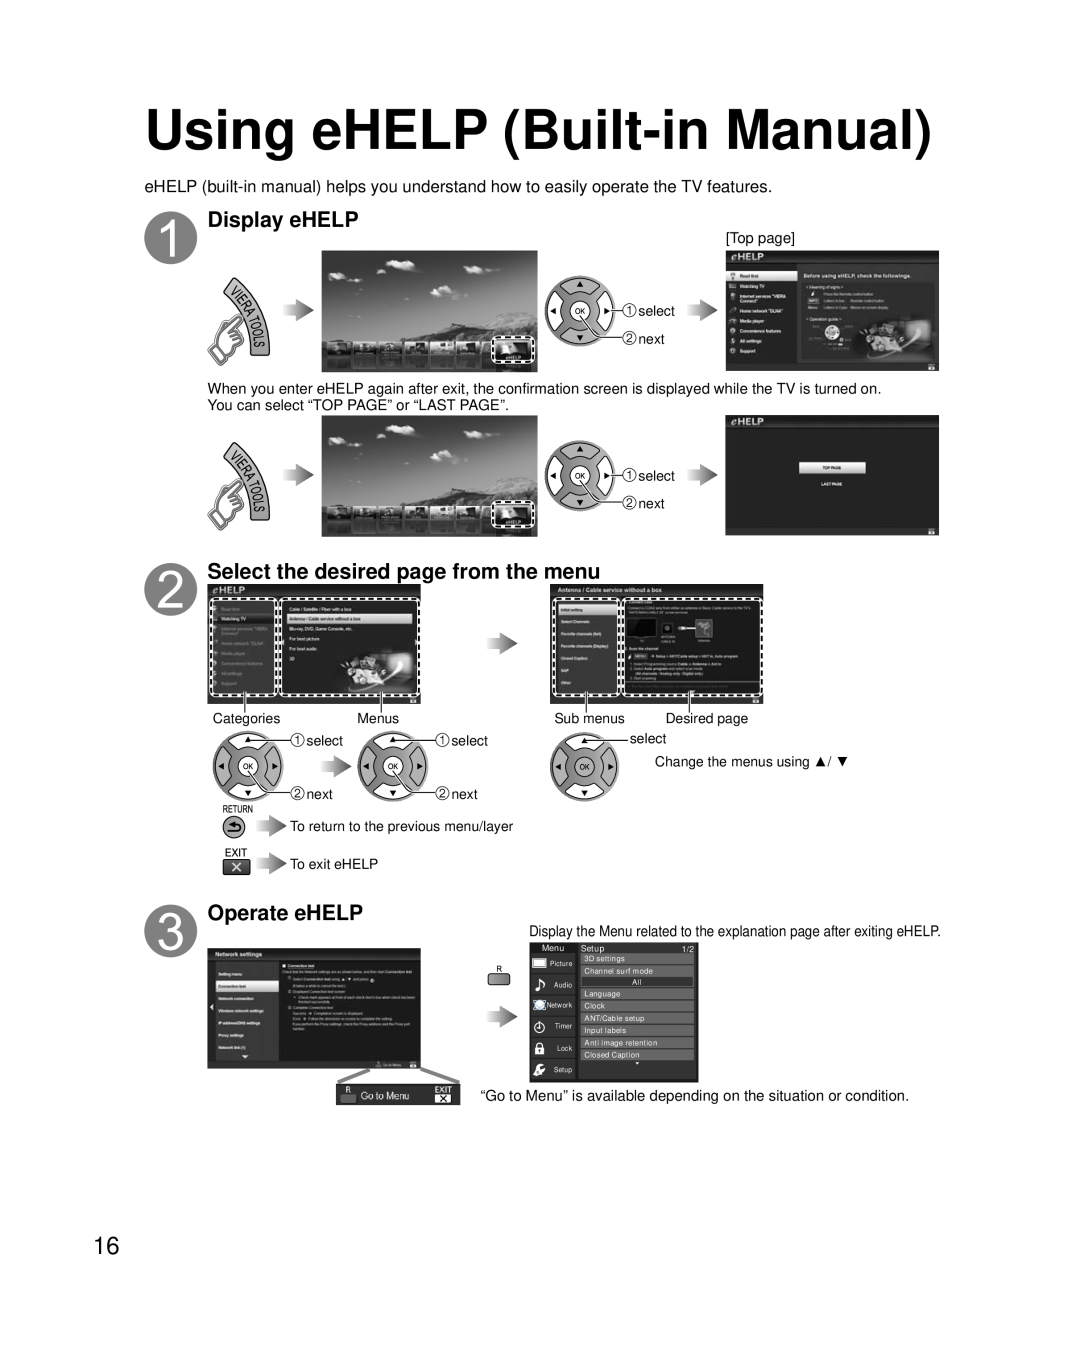 Panasonic TC-P60UT50 Using eHELP Built-in Manual, Display eHELP, Select the desired page from the menu, Operate eHELP 